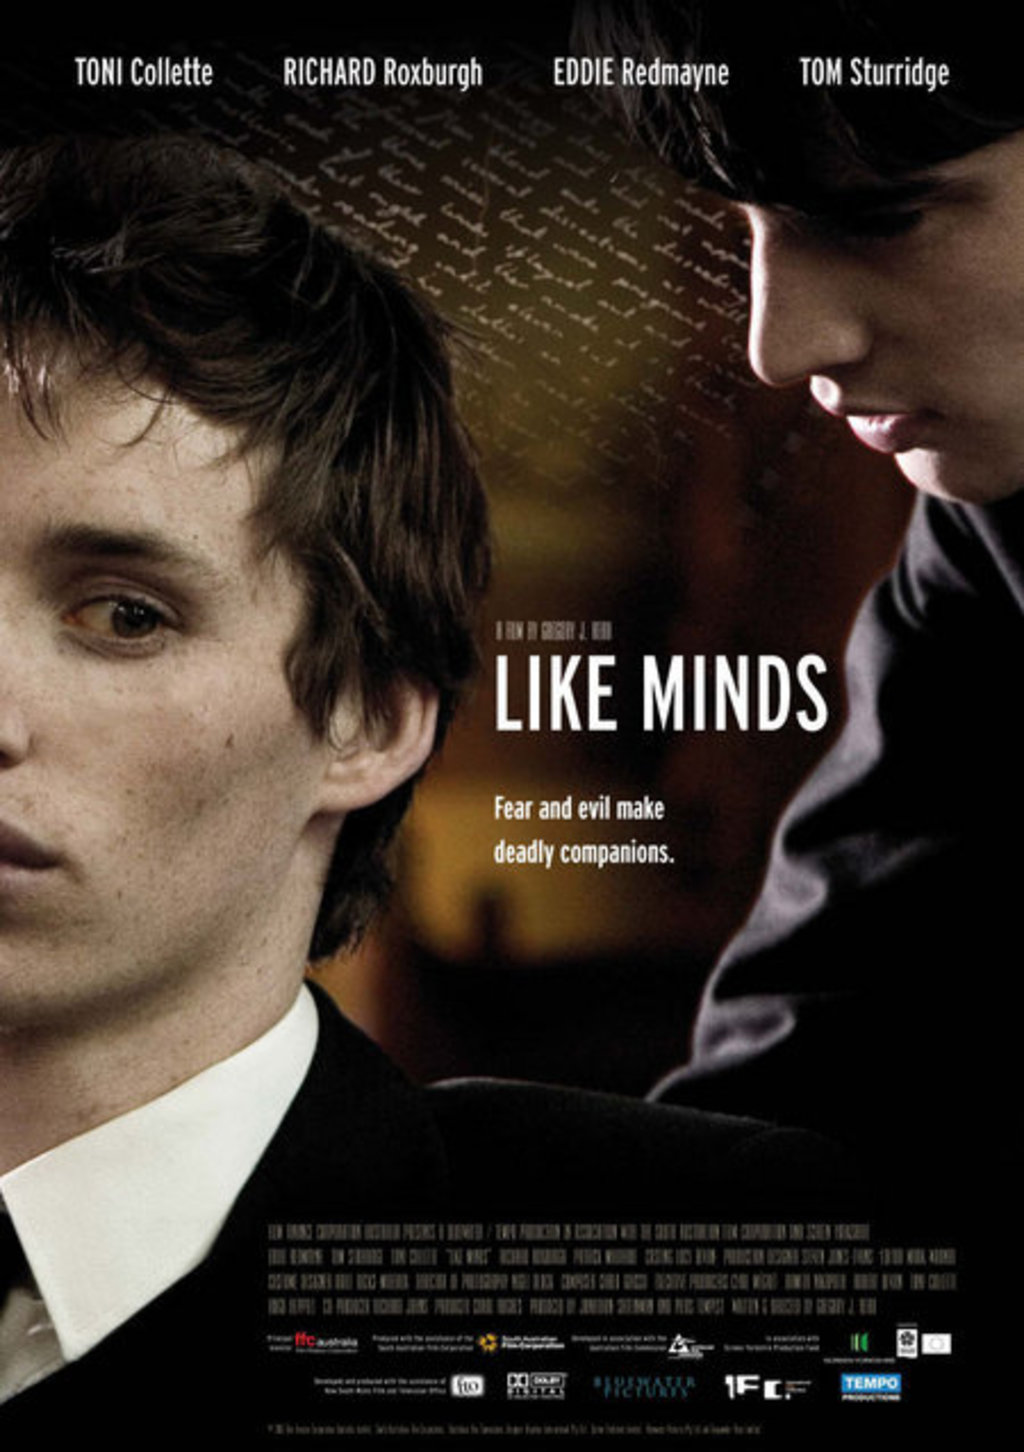 Watch Like Minds on Netflix Today! | NetflixMovies.com